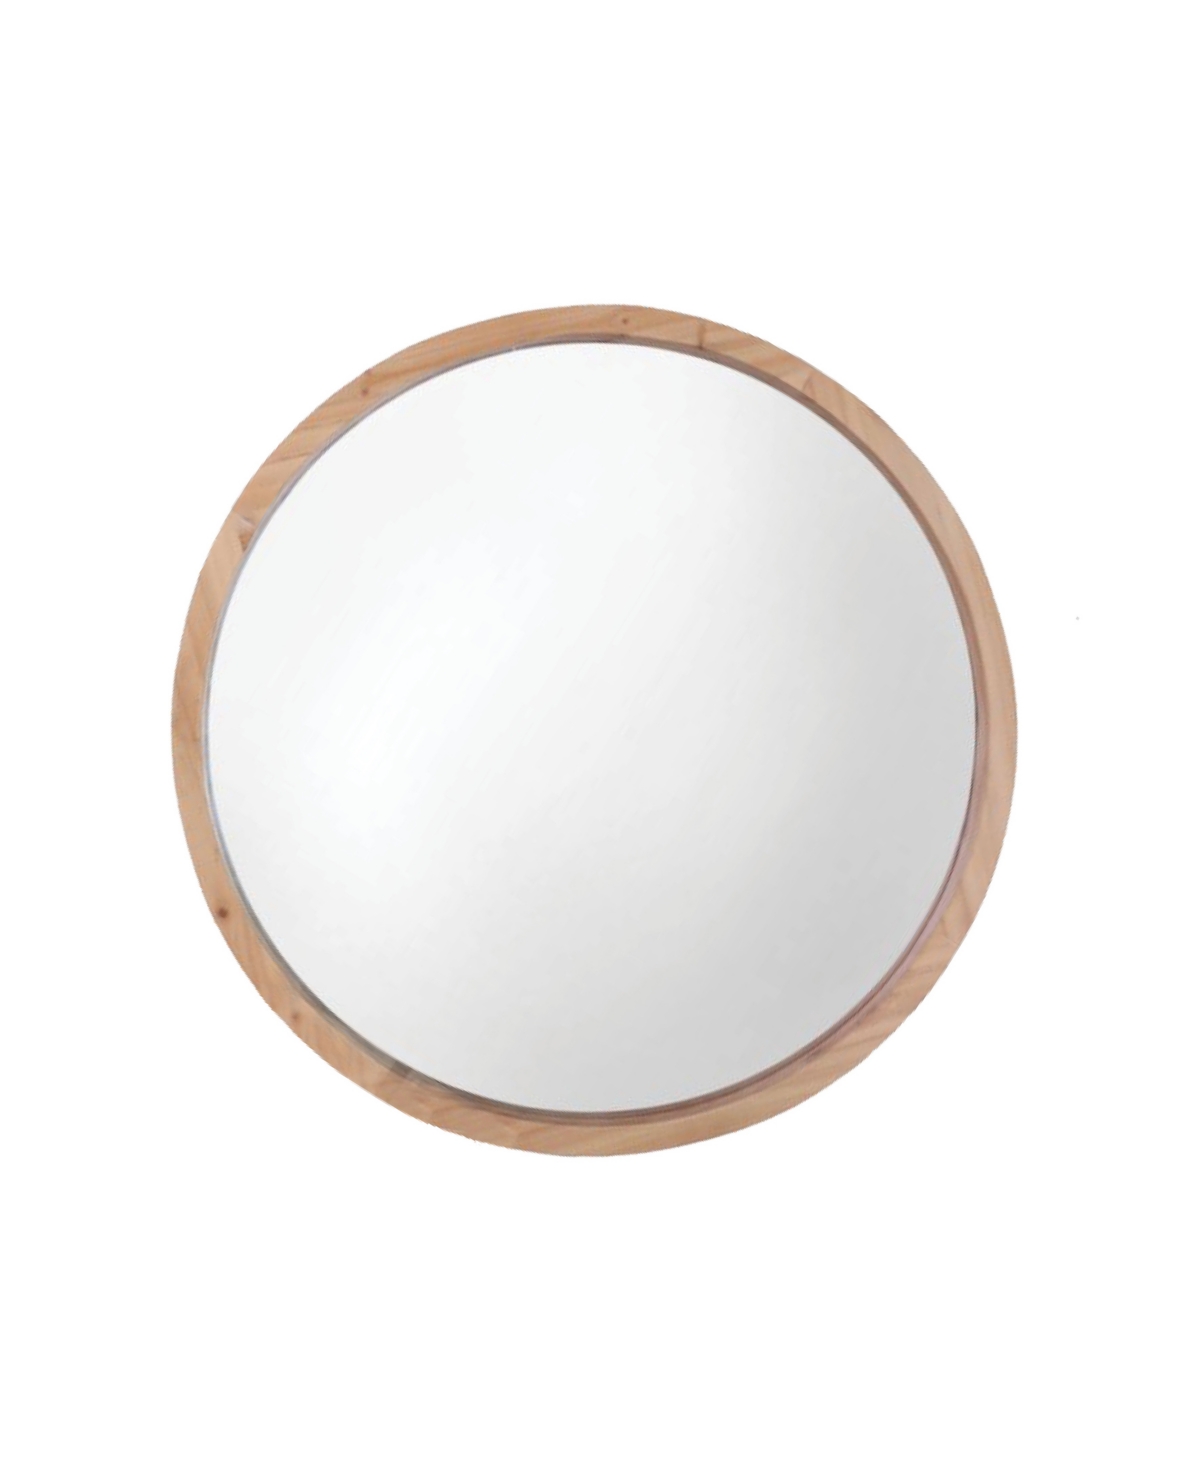 Mirrorize Round Natural Wood Frame Bathroom Vanity Wall Mirror, 30" D